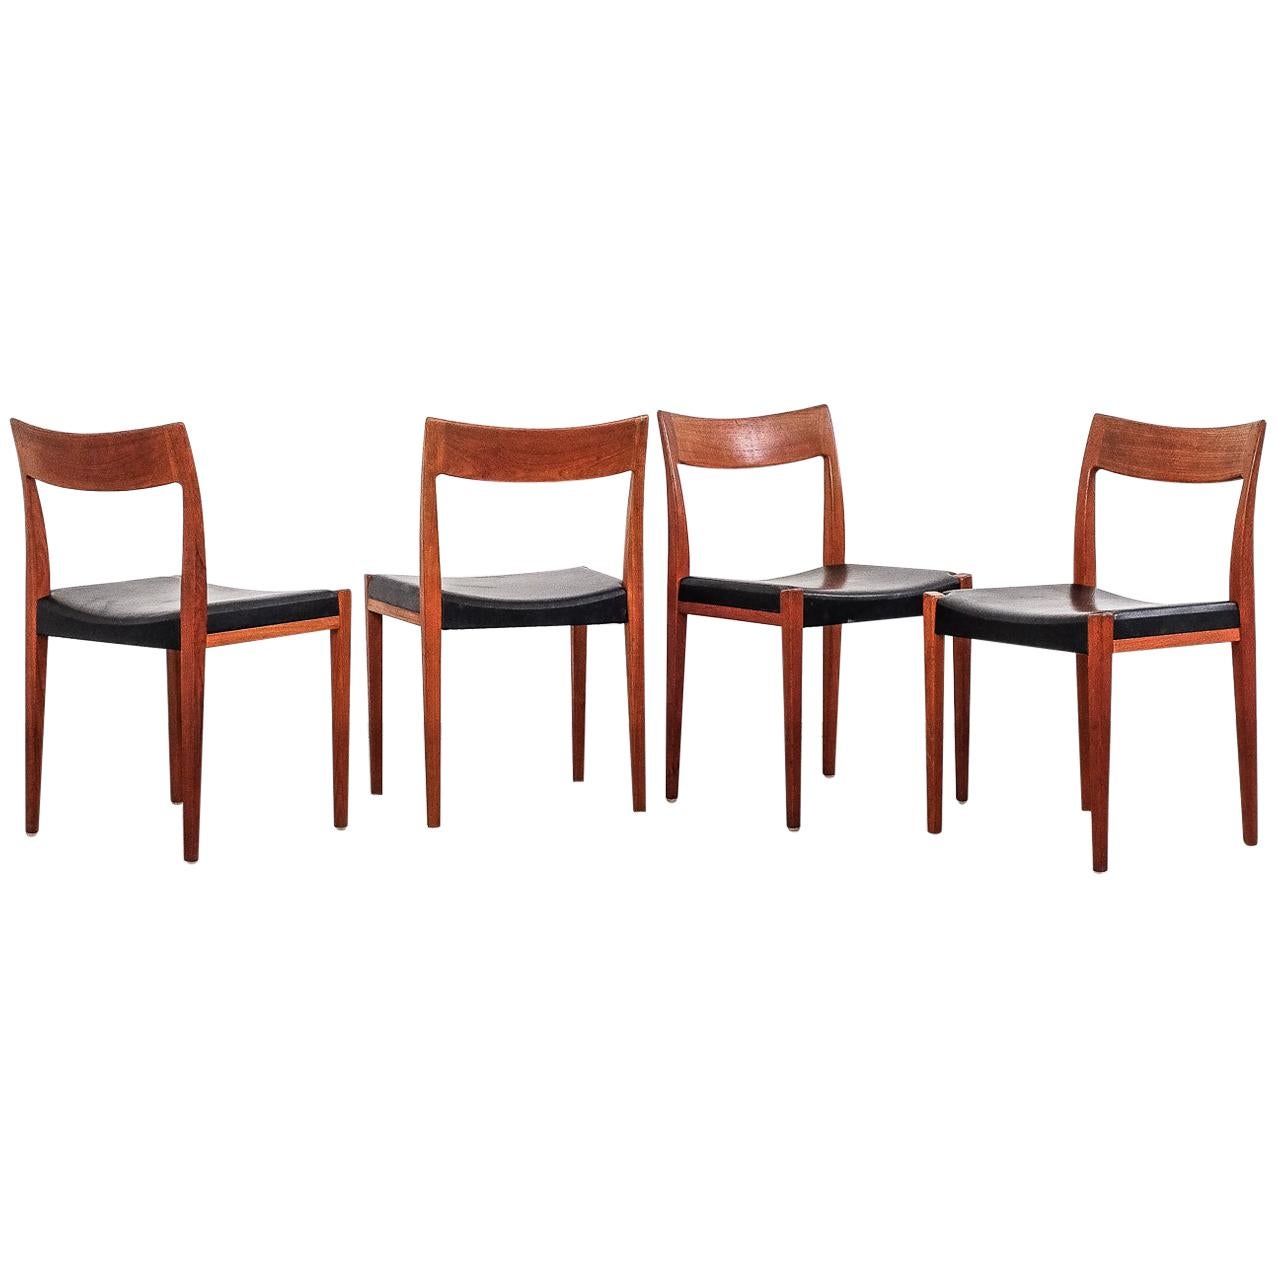 'Kontiki' Teak Dining Chairs by Yngve Ekström for Troeds, Set of 4